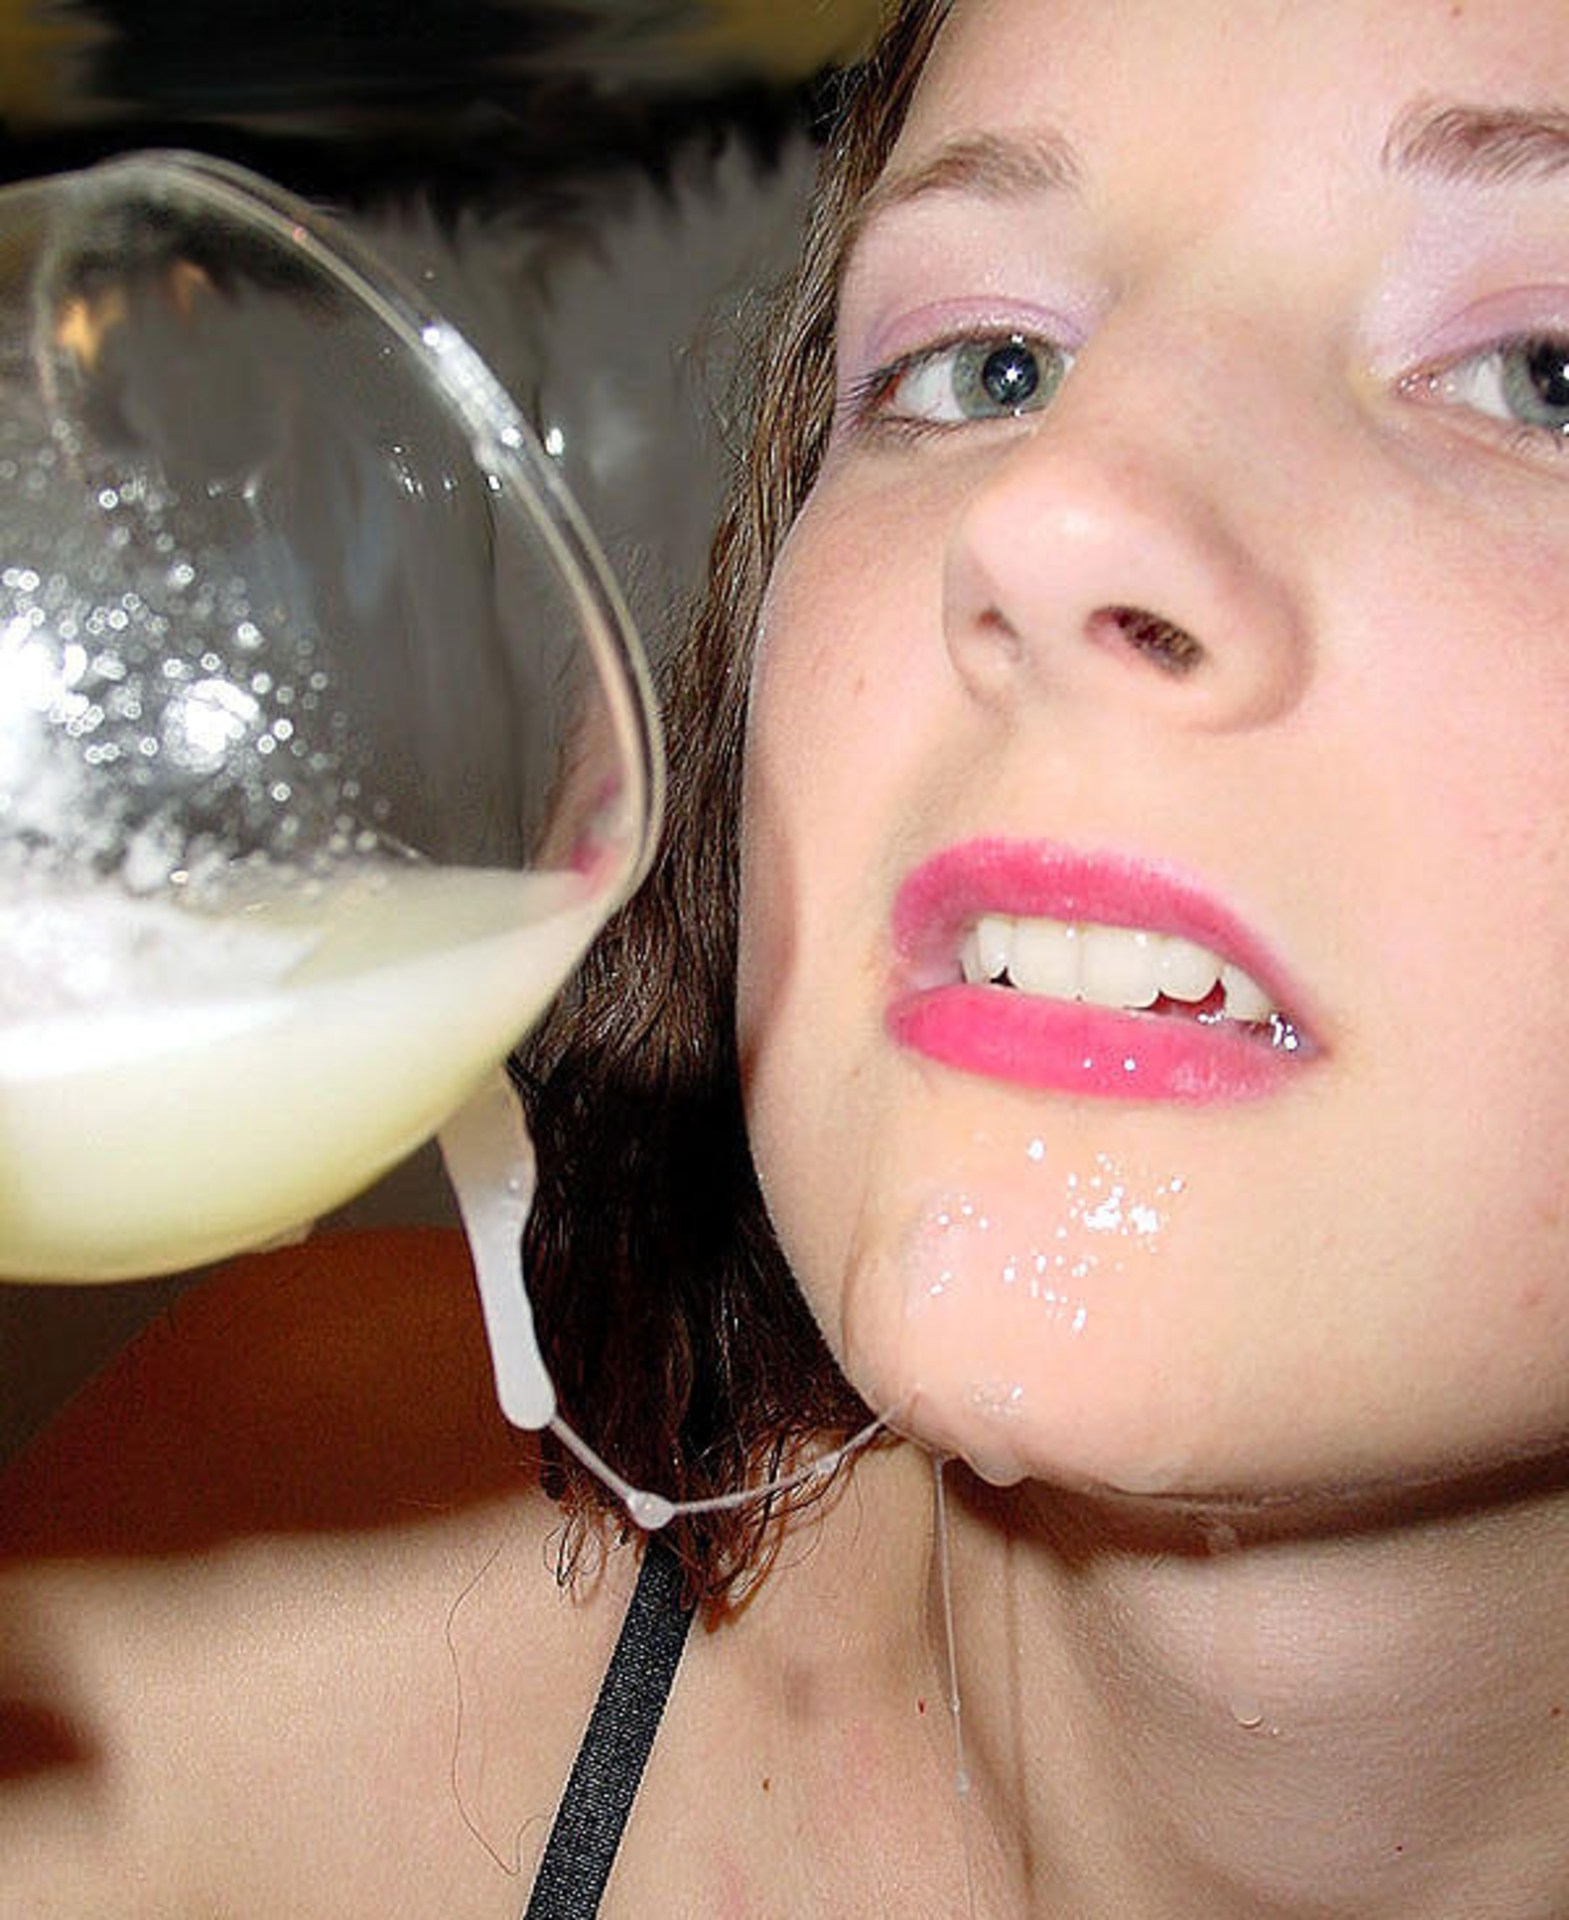 Drink Cum From Glass - Women Drink Sperm by the Glass (83 photos) - sex eporner pics